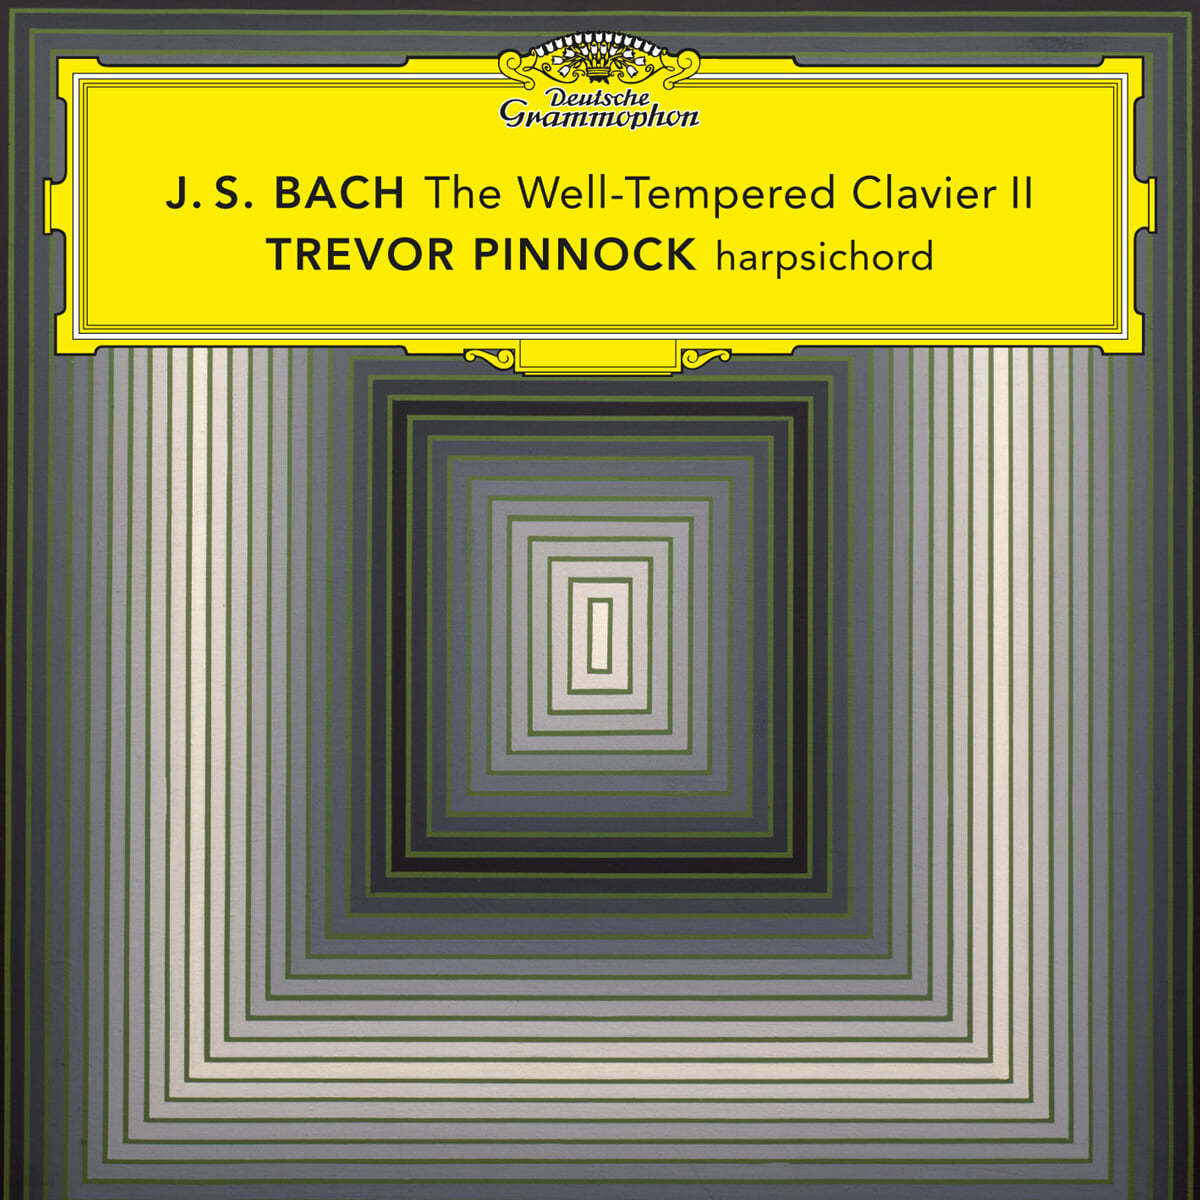 Trevor Pinnock 바흐: 평균율 클라비어 2권 - 트레버 피노크 (Bach: The Well-Tempered Clavier II) 